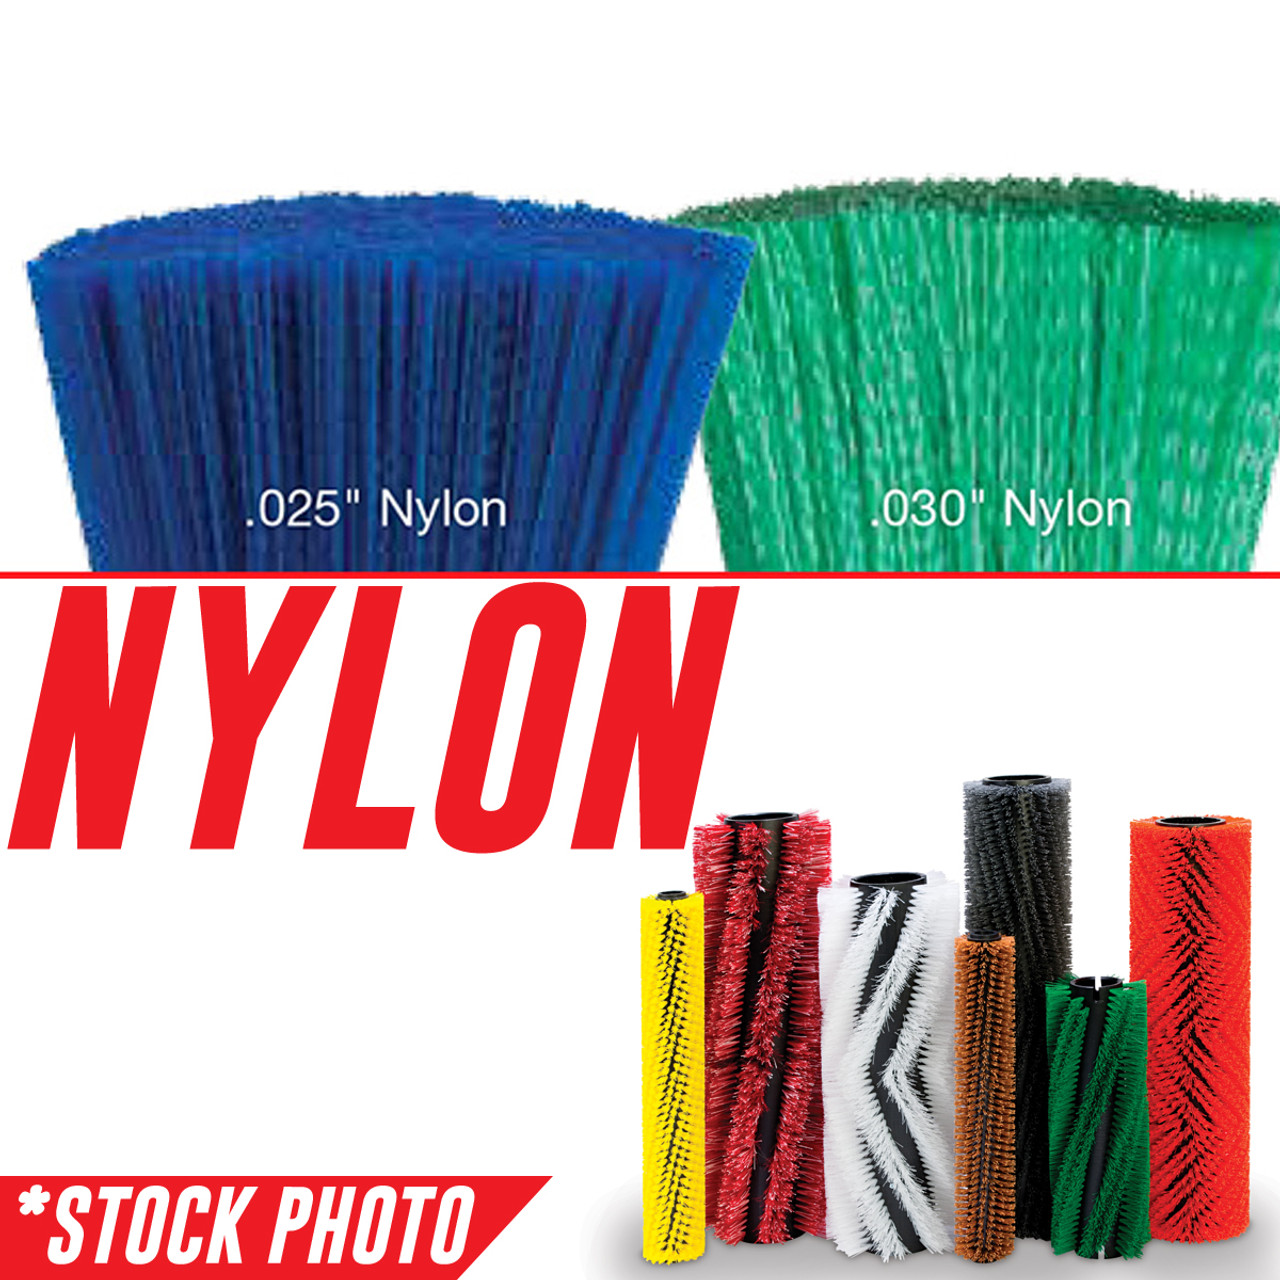 56410294: 38" Cylindrical Brush 16 Single Row Soft Nylon fits Advance-Nilfisk Models Adgressor 3820, Retriever 3800